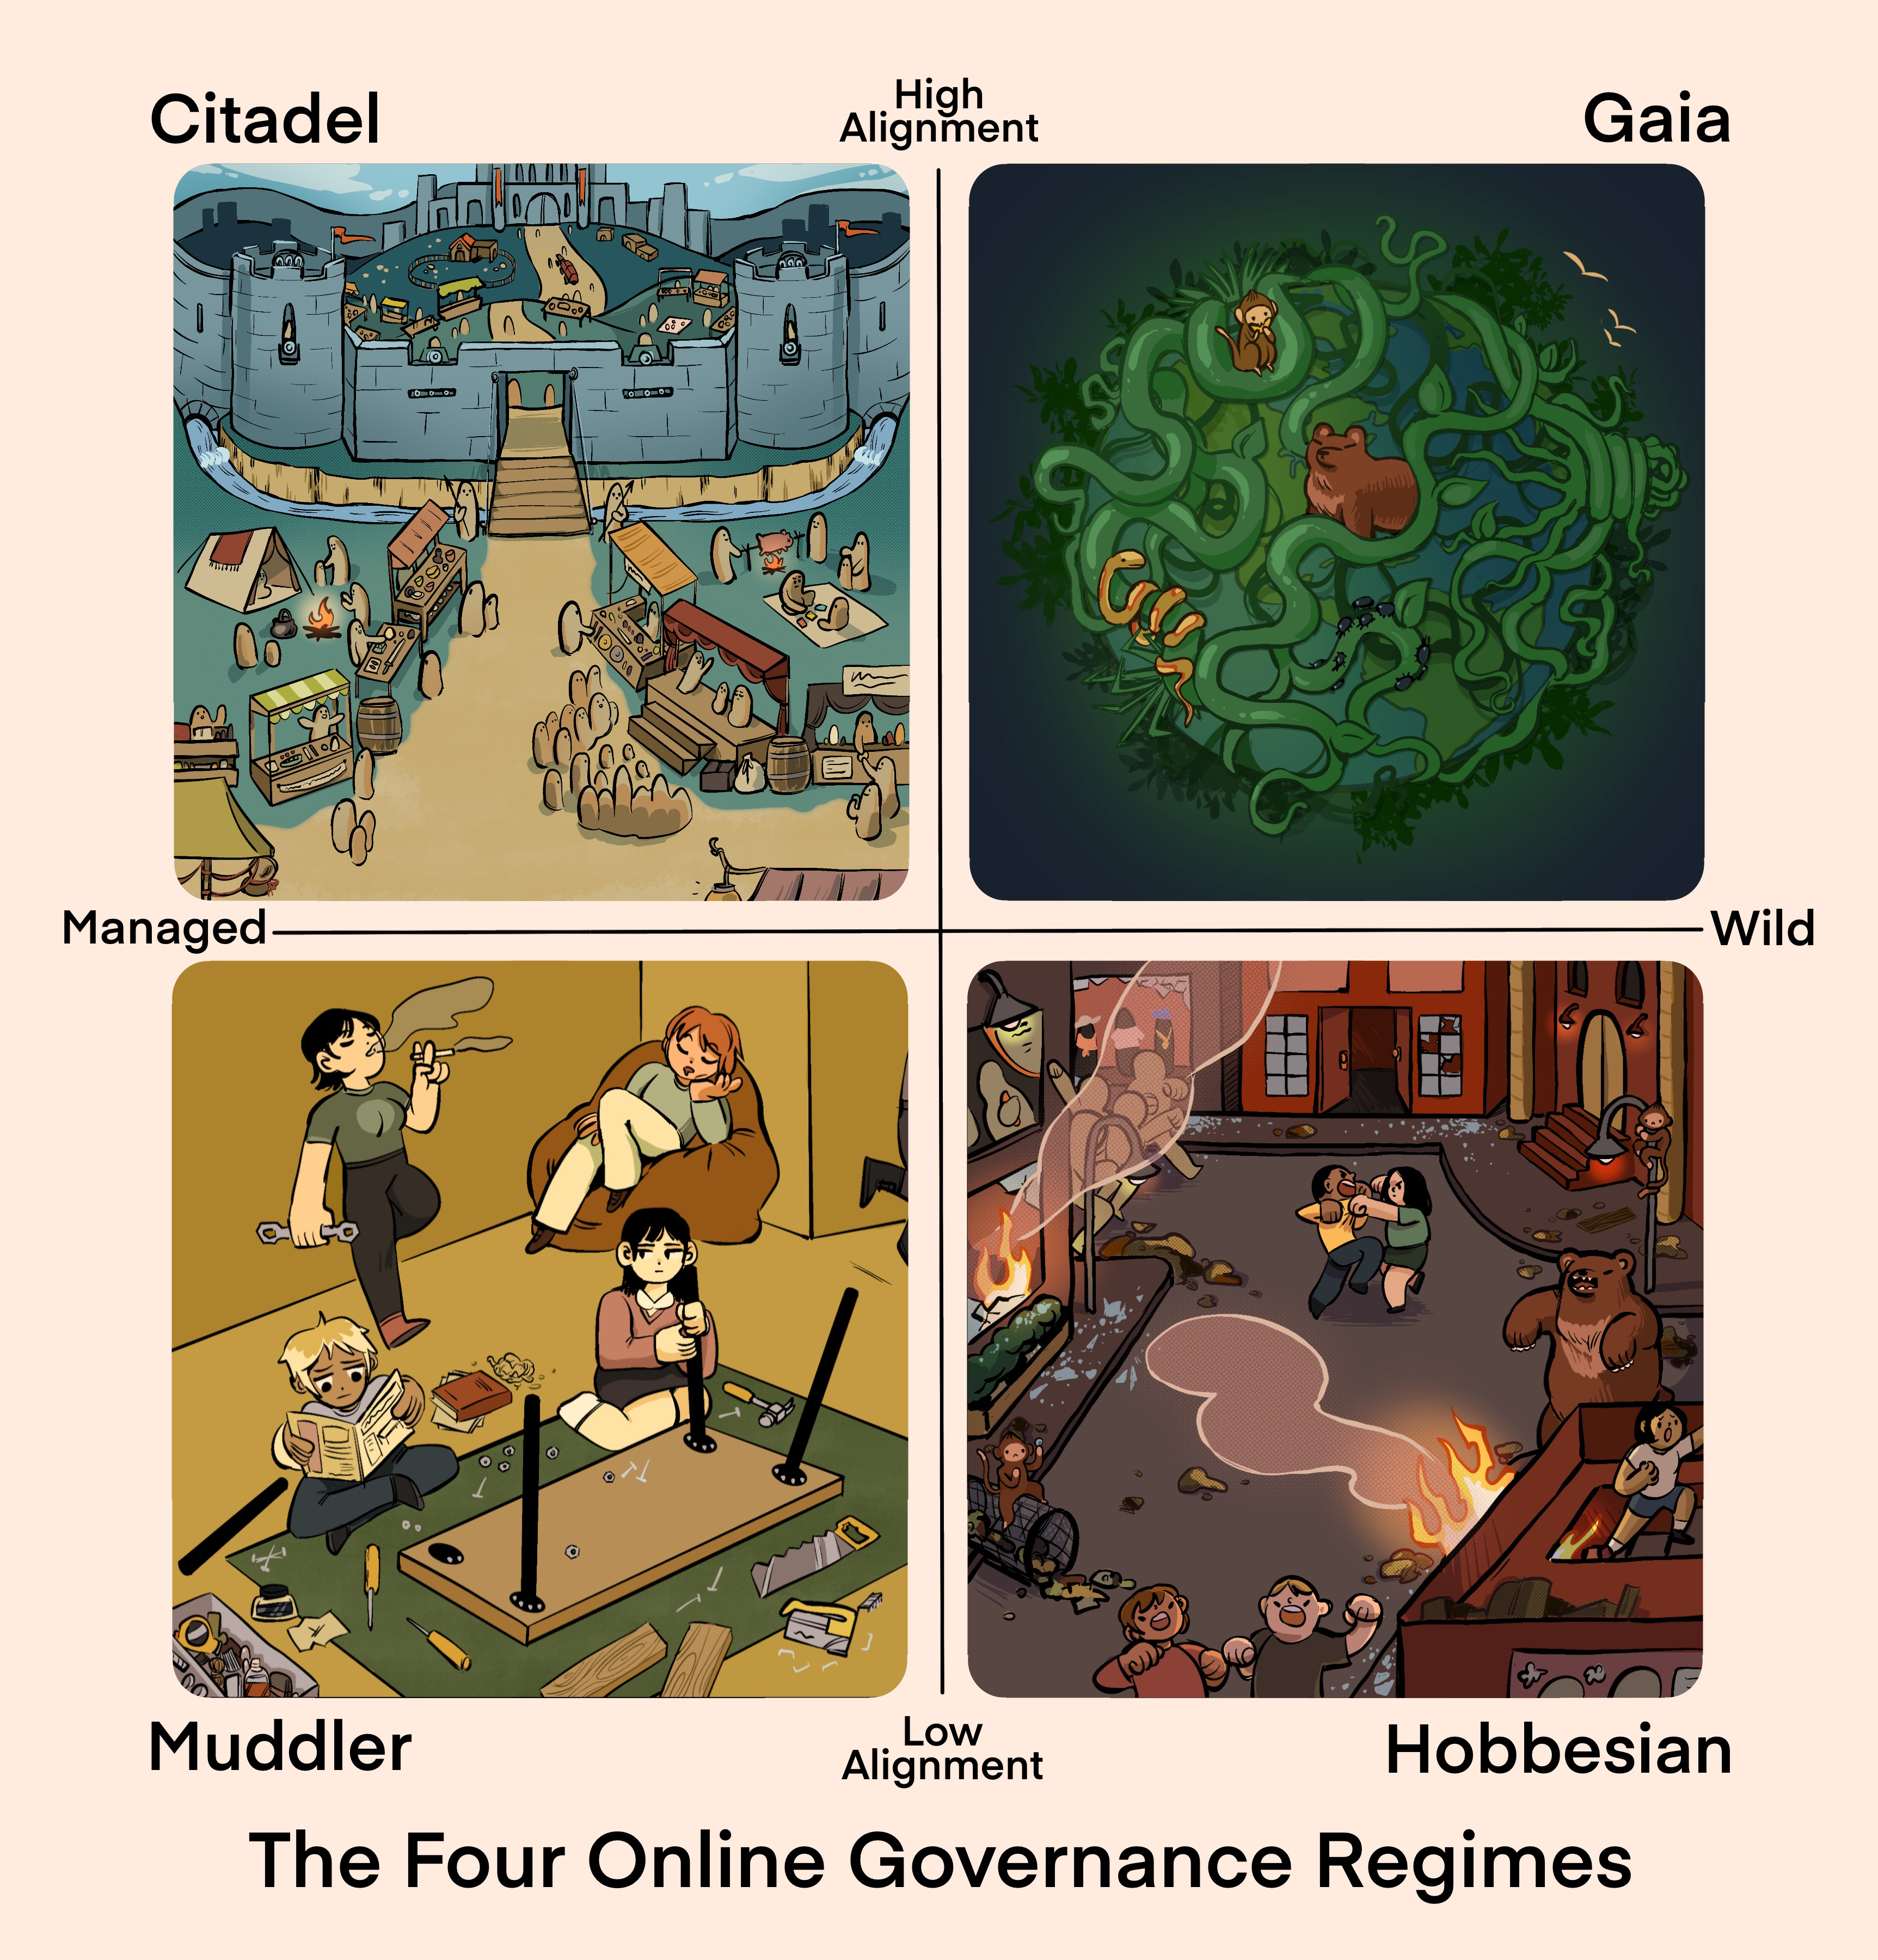 The Four Online Governance Regimes